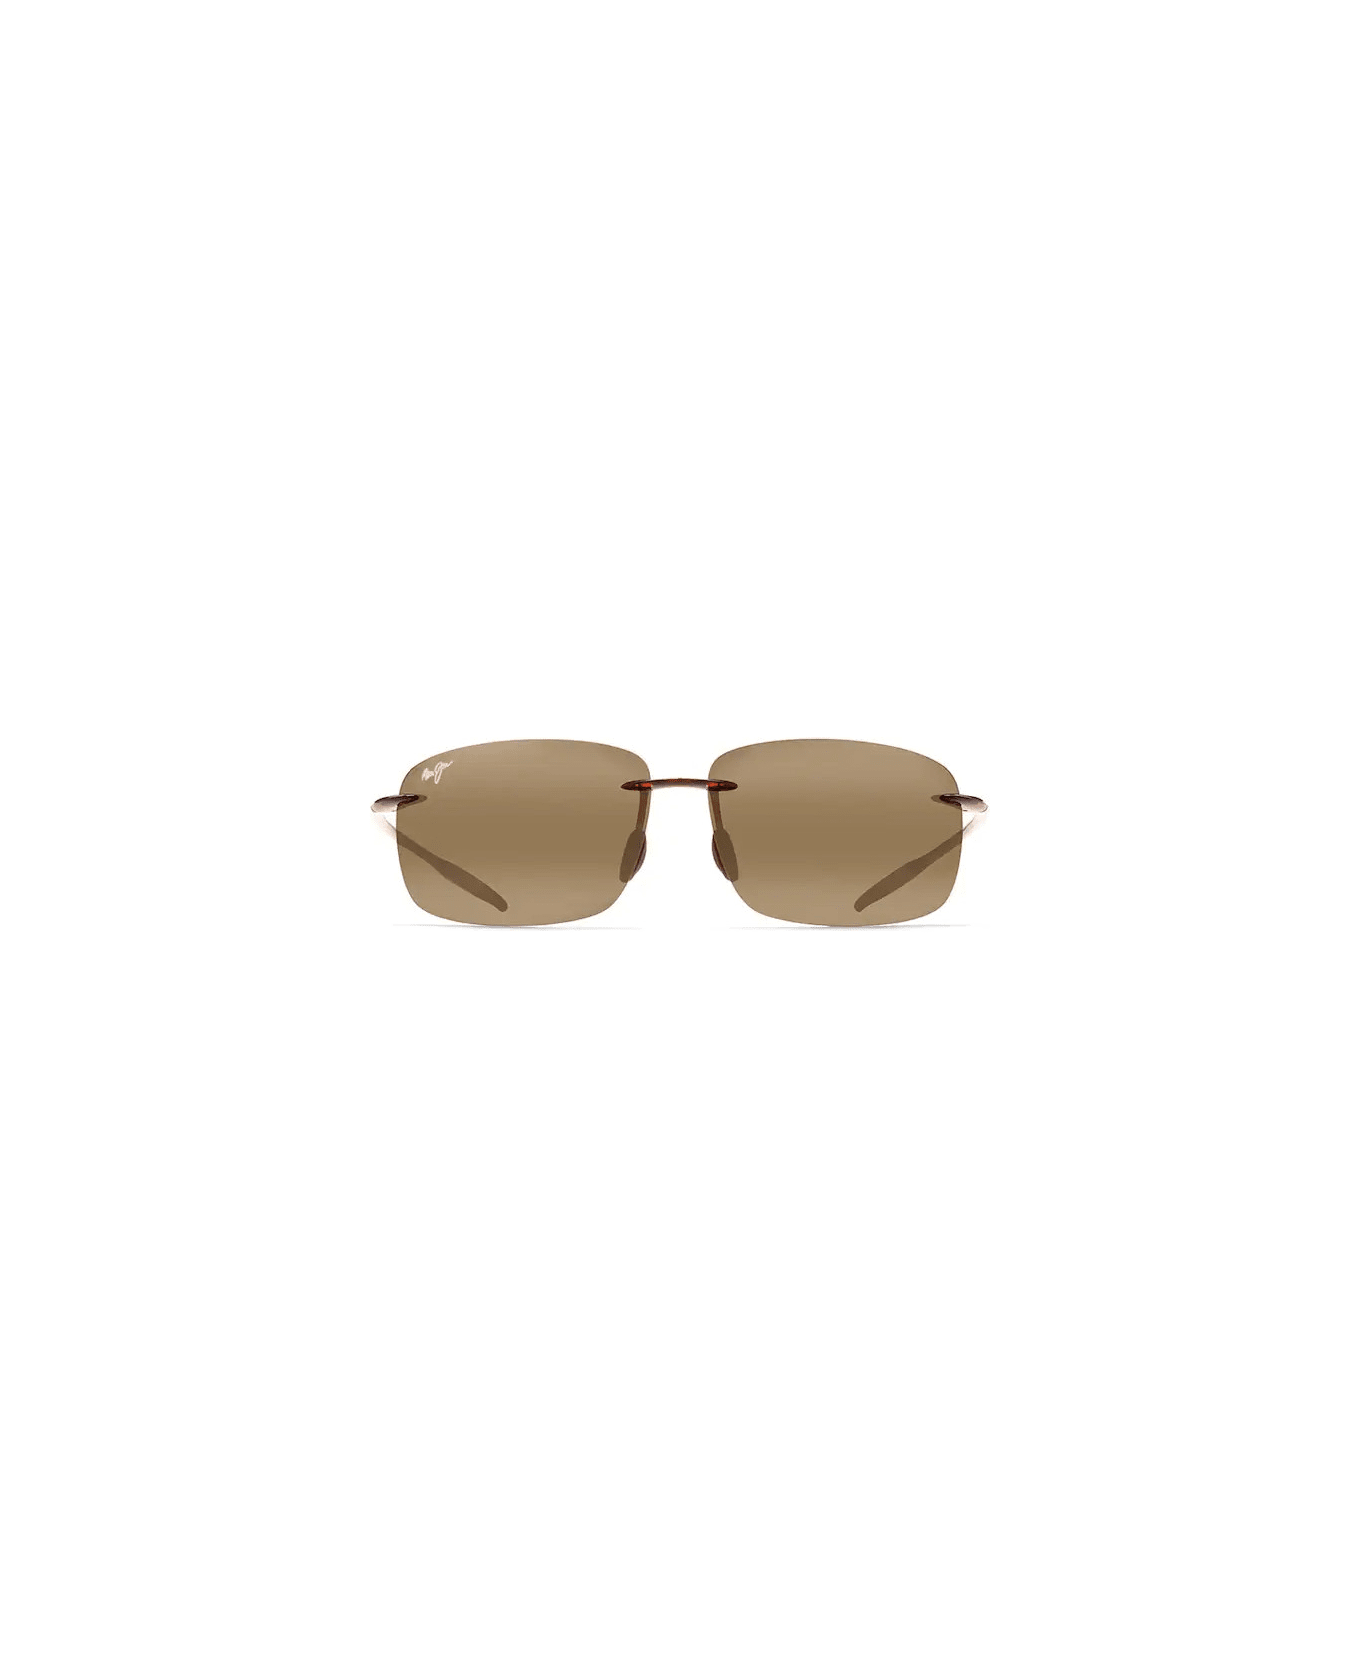 Maui Jim H422 26 Sunglasses - Marrone